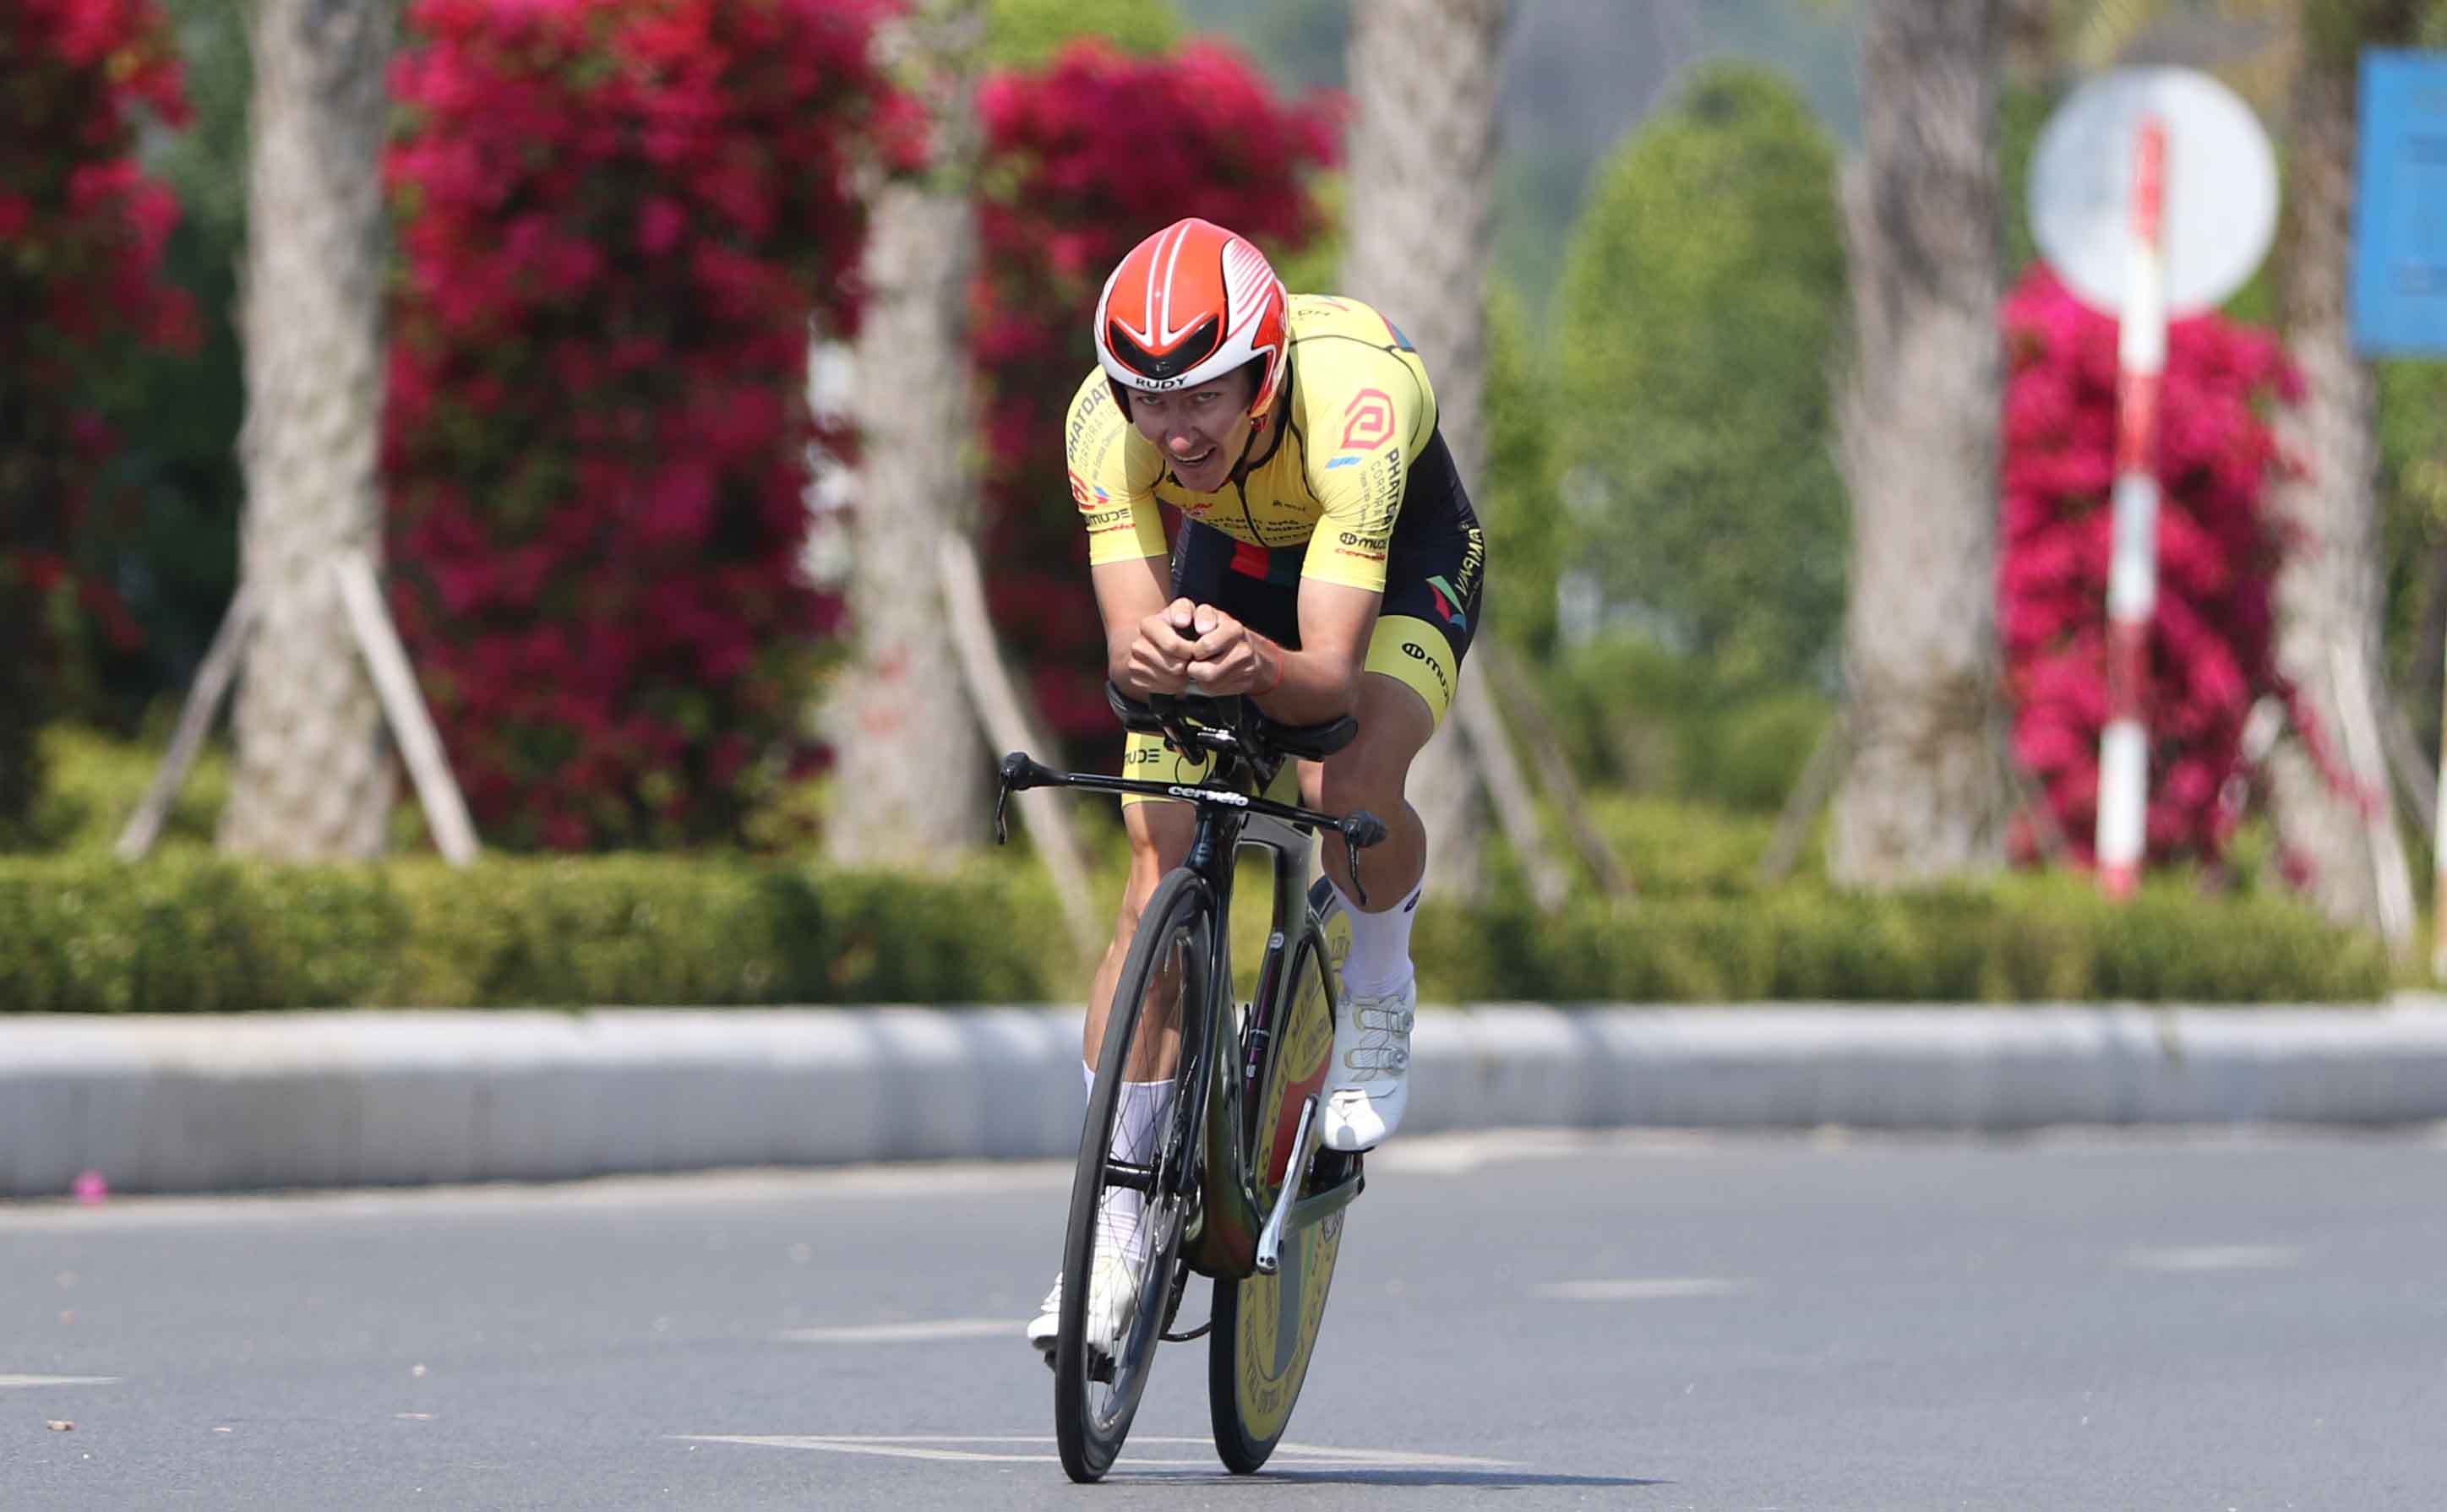 Russian cyclist makes winning debut at Vietnamese national tournament